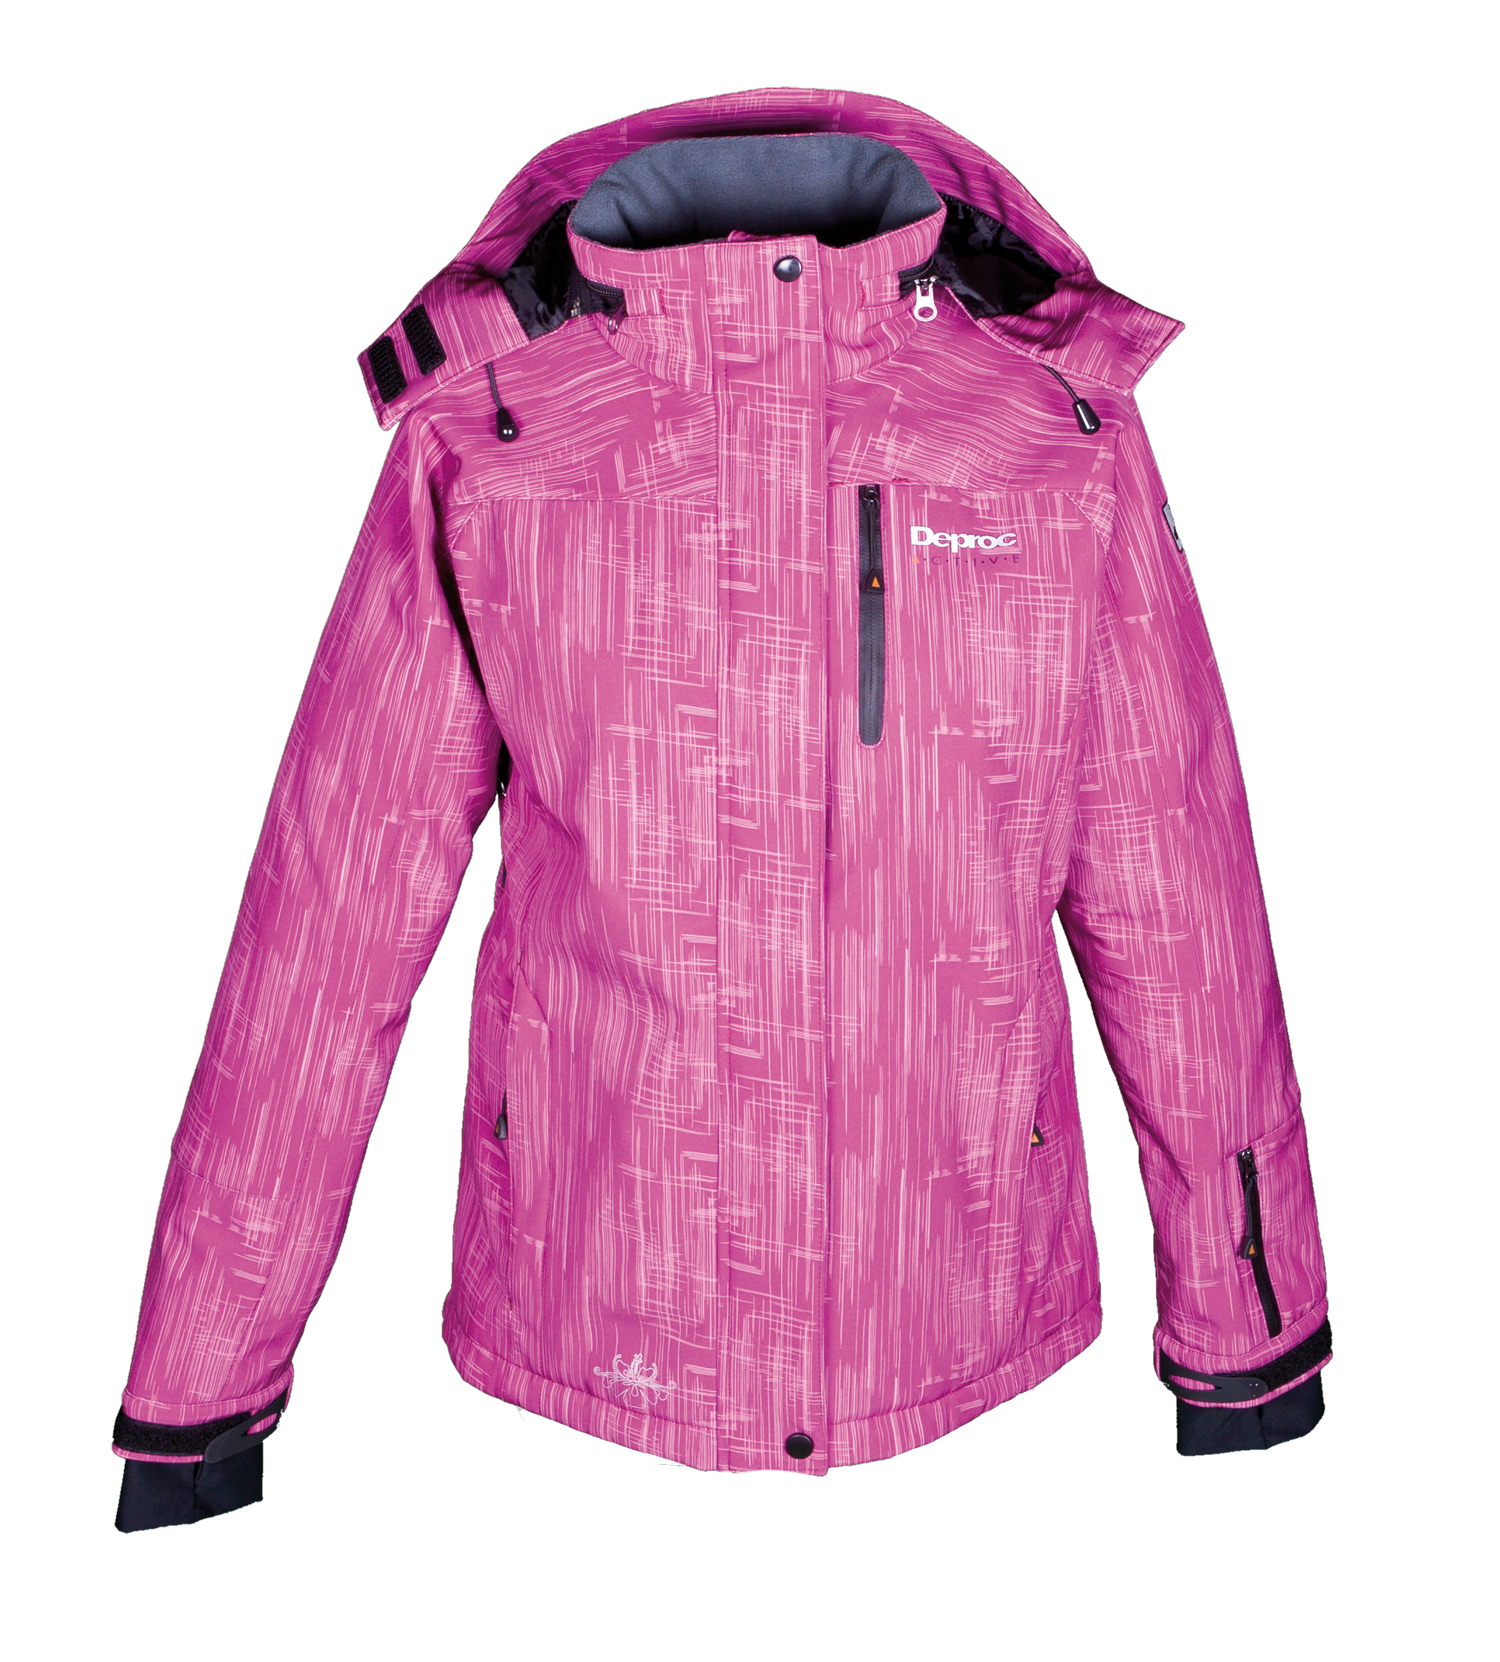 DEPROC Softshell-Skijacke und Winterjacke Damen  CHICOPEE LADY  Farbe: purple print  Größe: 56